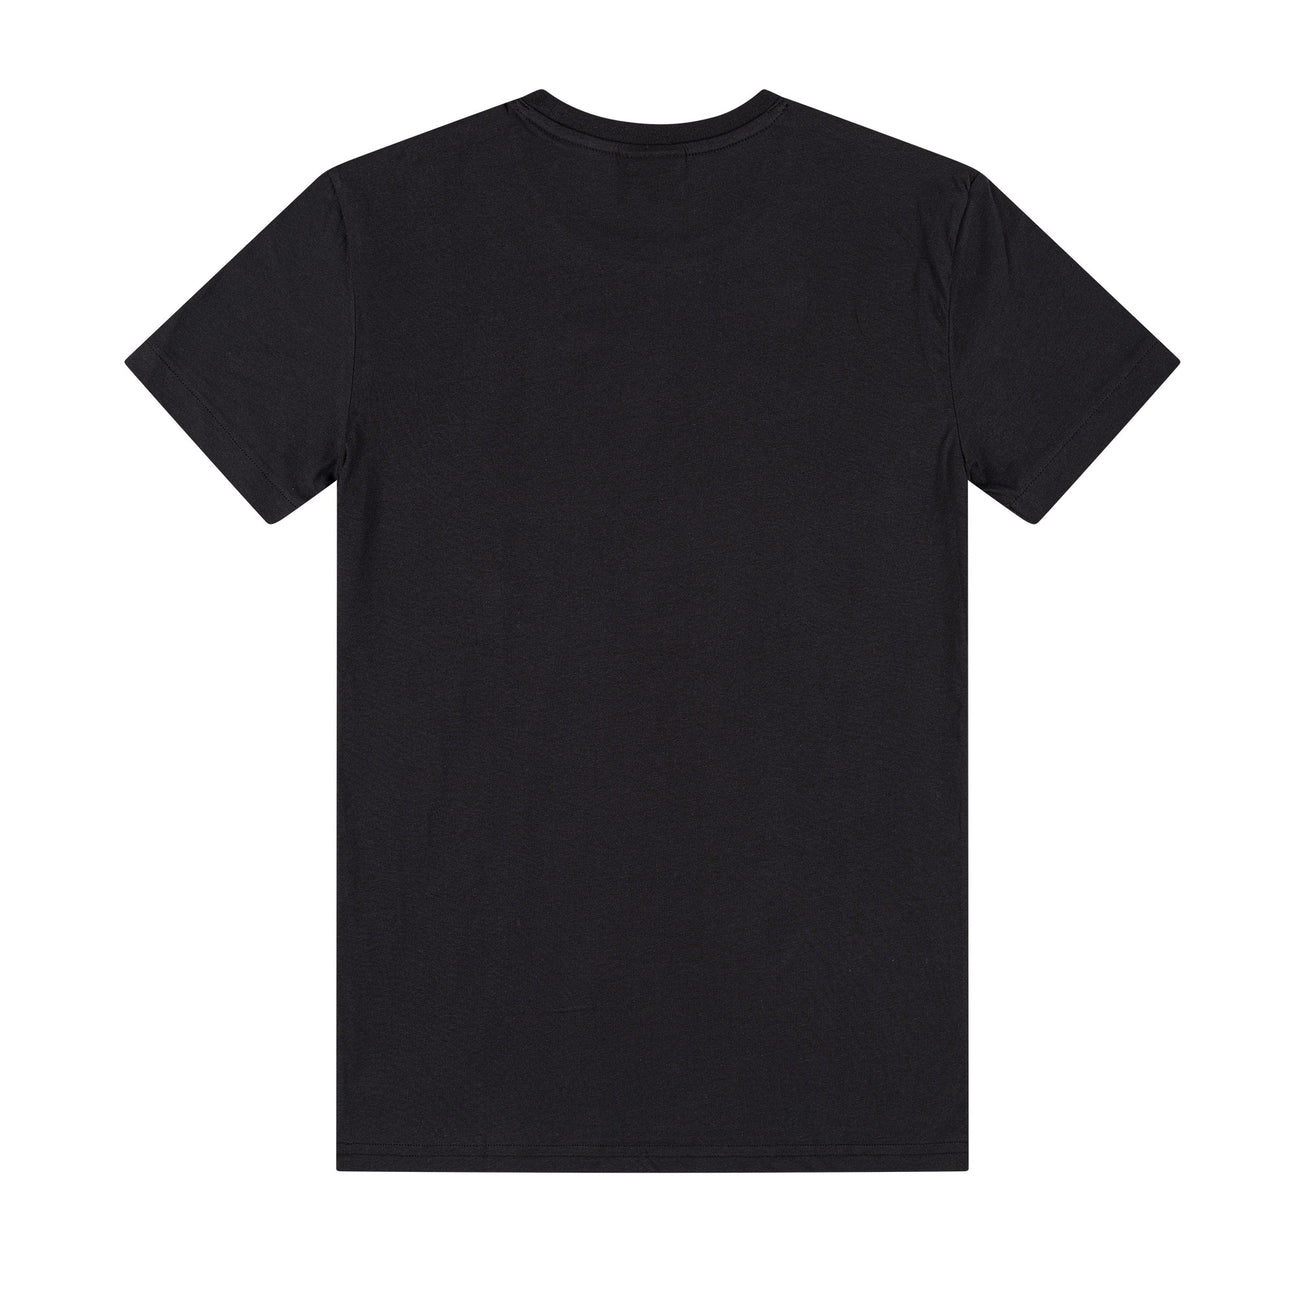 Armin van Buuren logo t-shirt black